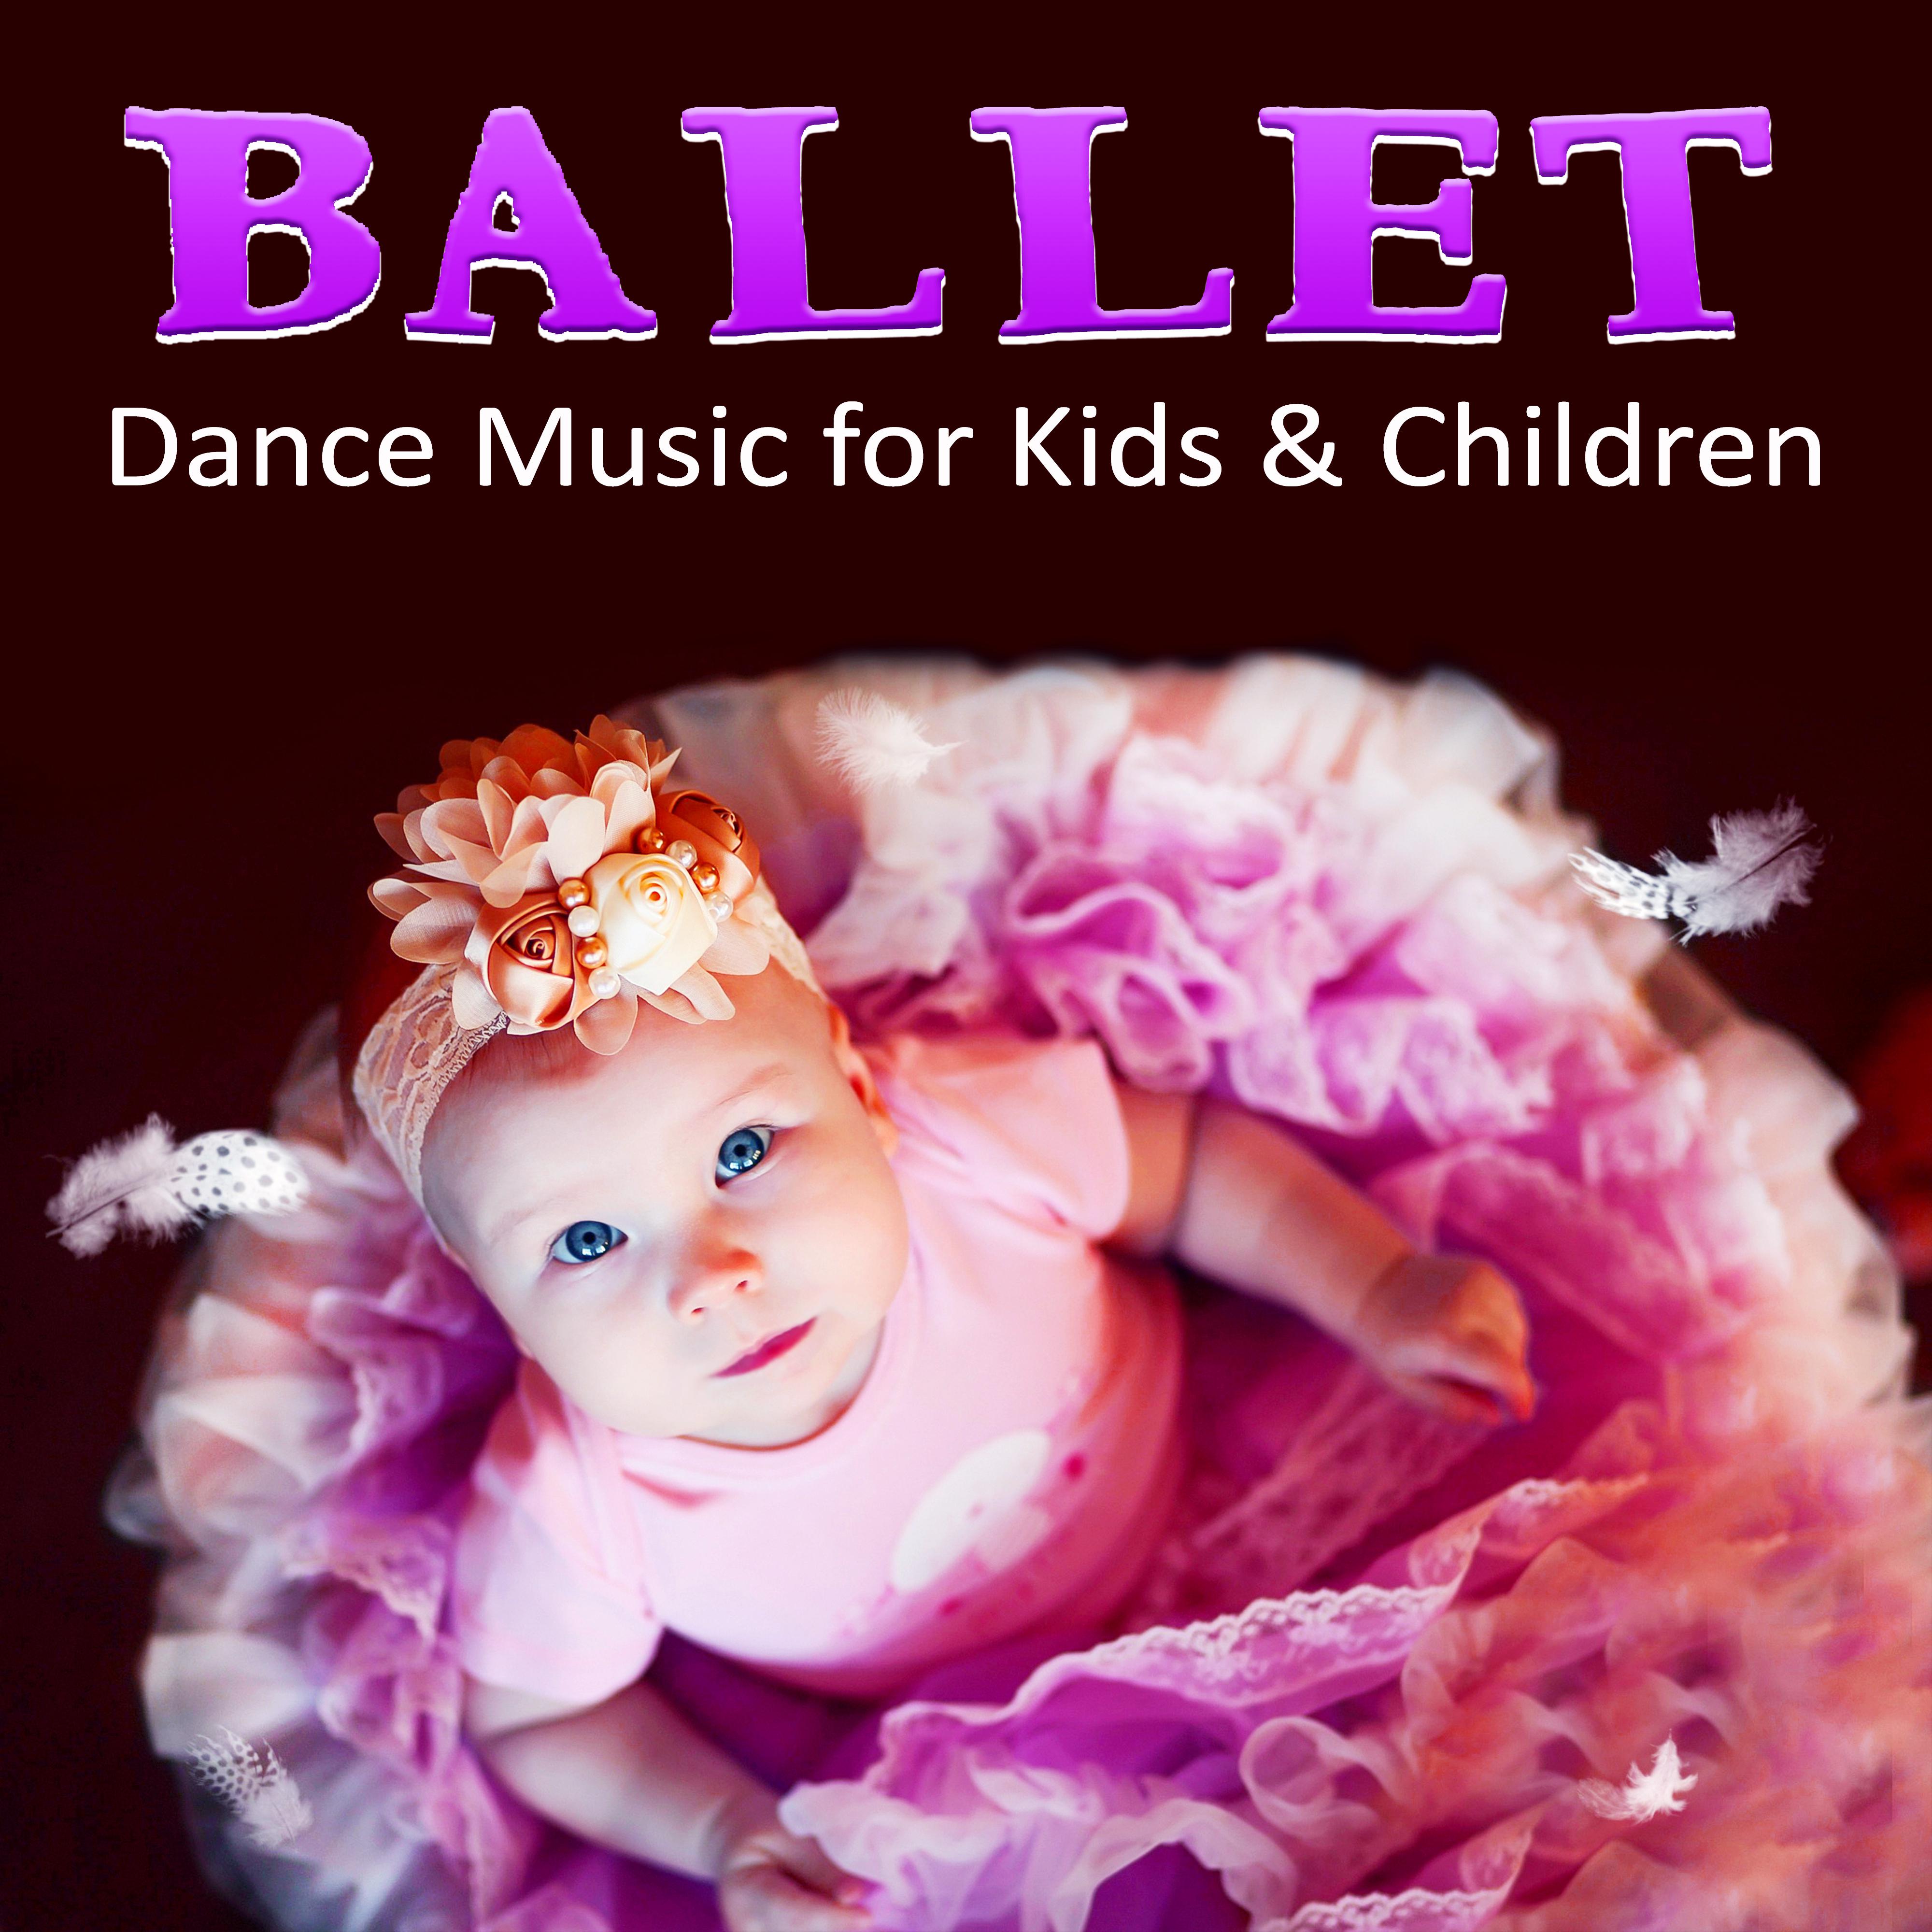 Ballet Dance Music for Kids & Children - Ballet Class Music, Dance Lessons, Baby Ballet, Piano Music for Ballet, First Ballet Lessons